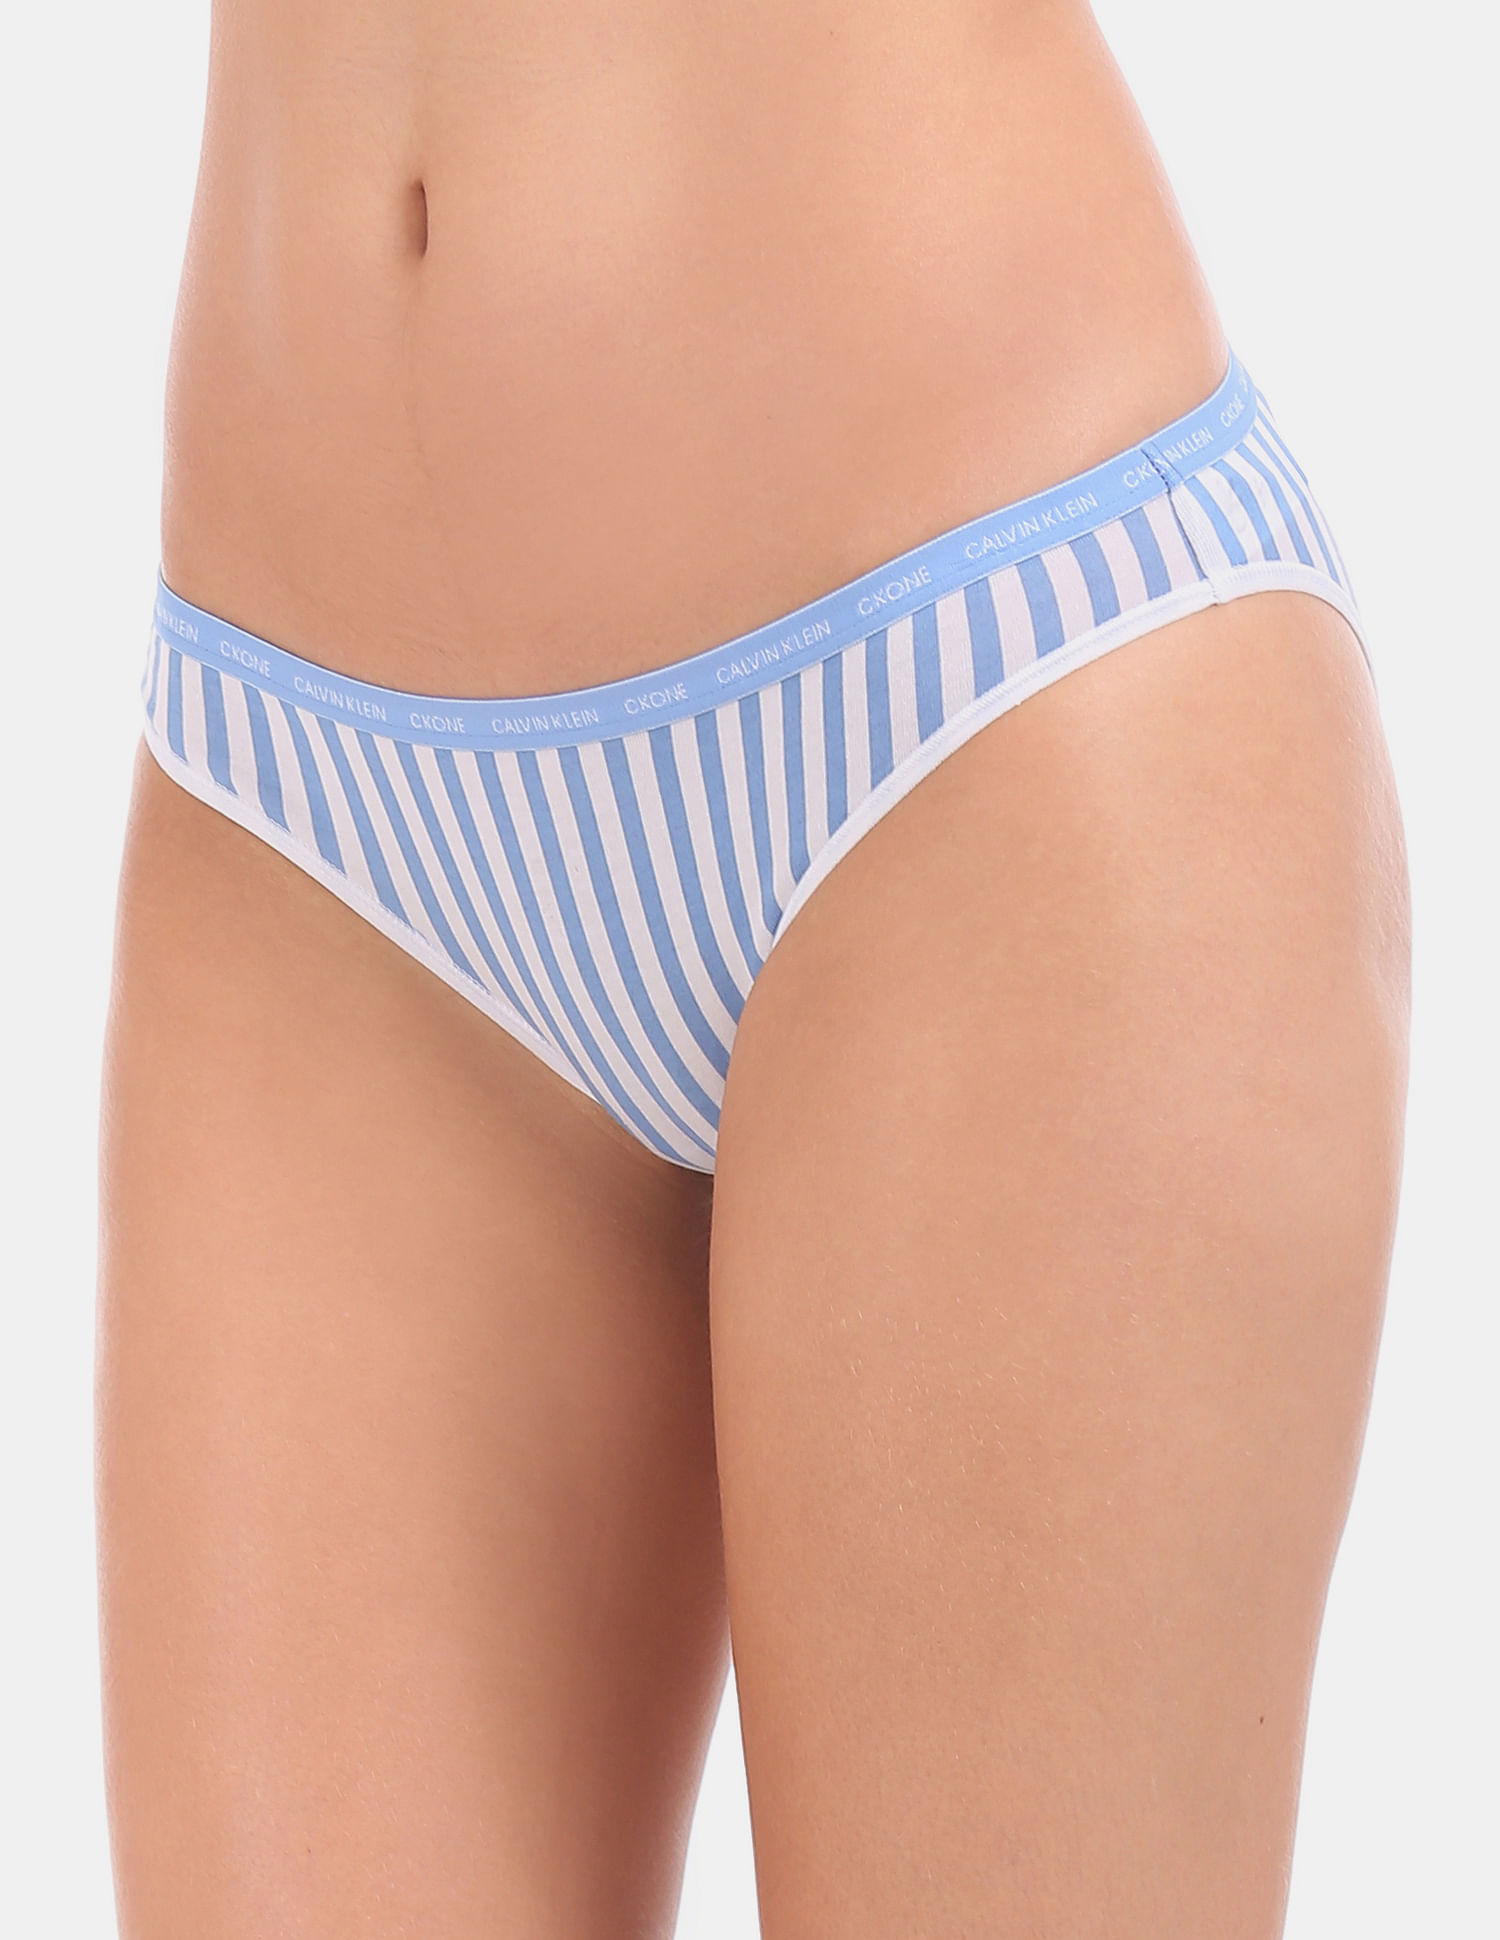 Lucky Brand Women's Microfiber Bikini Panties Multi Pack, 3PK Blue